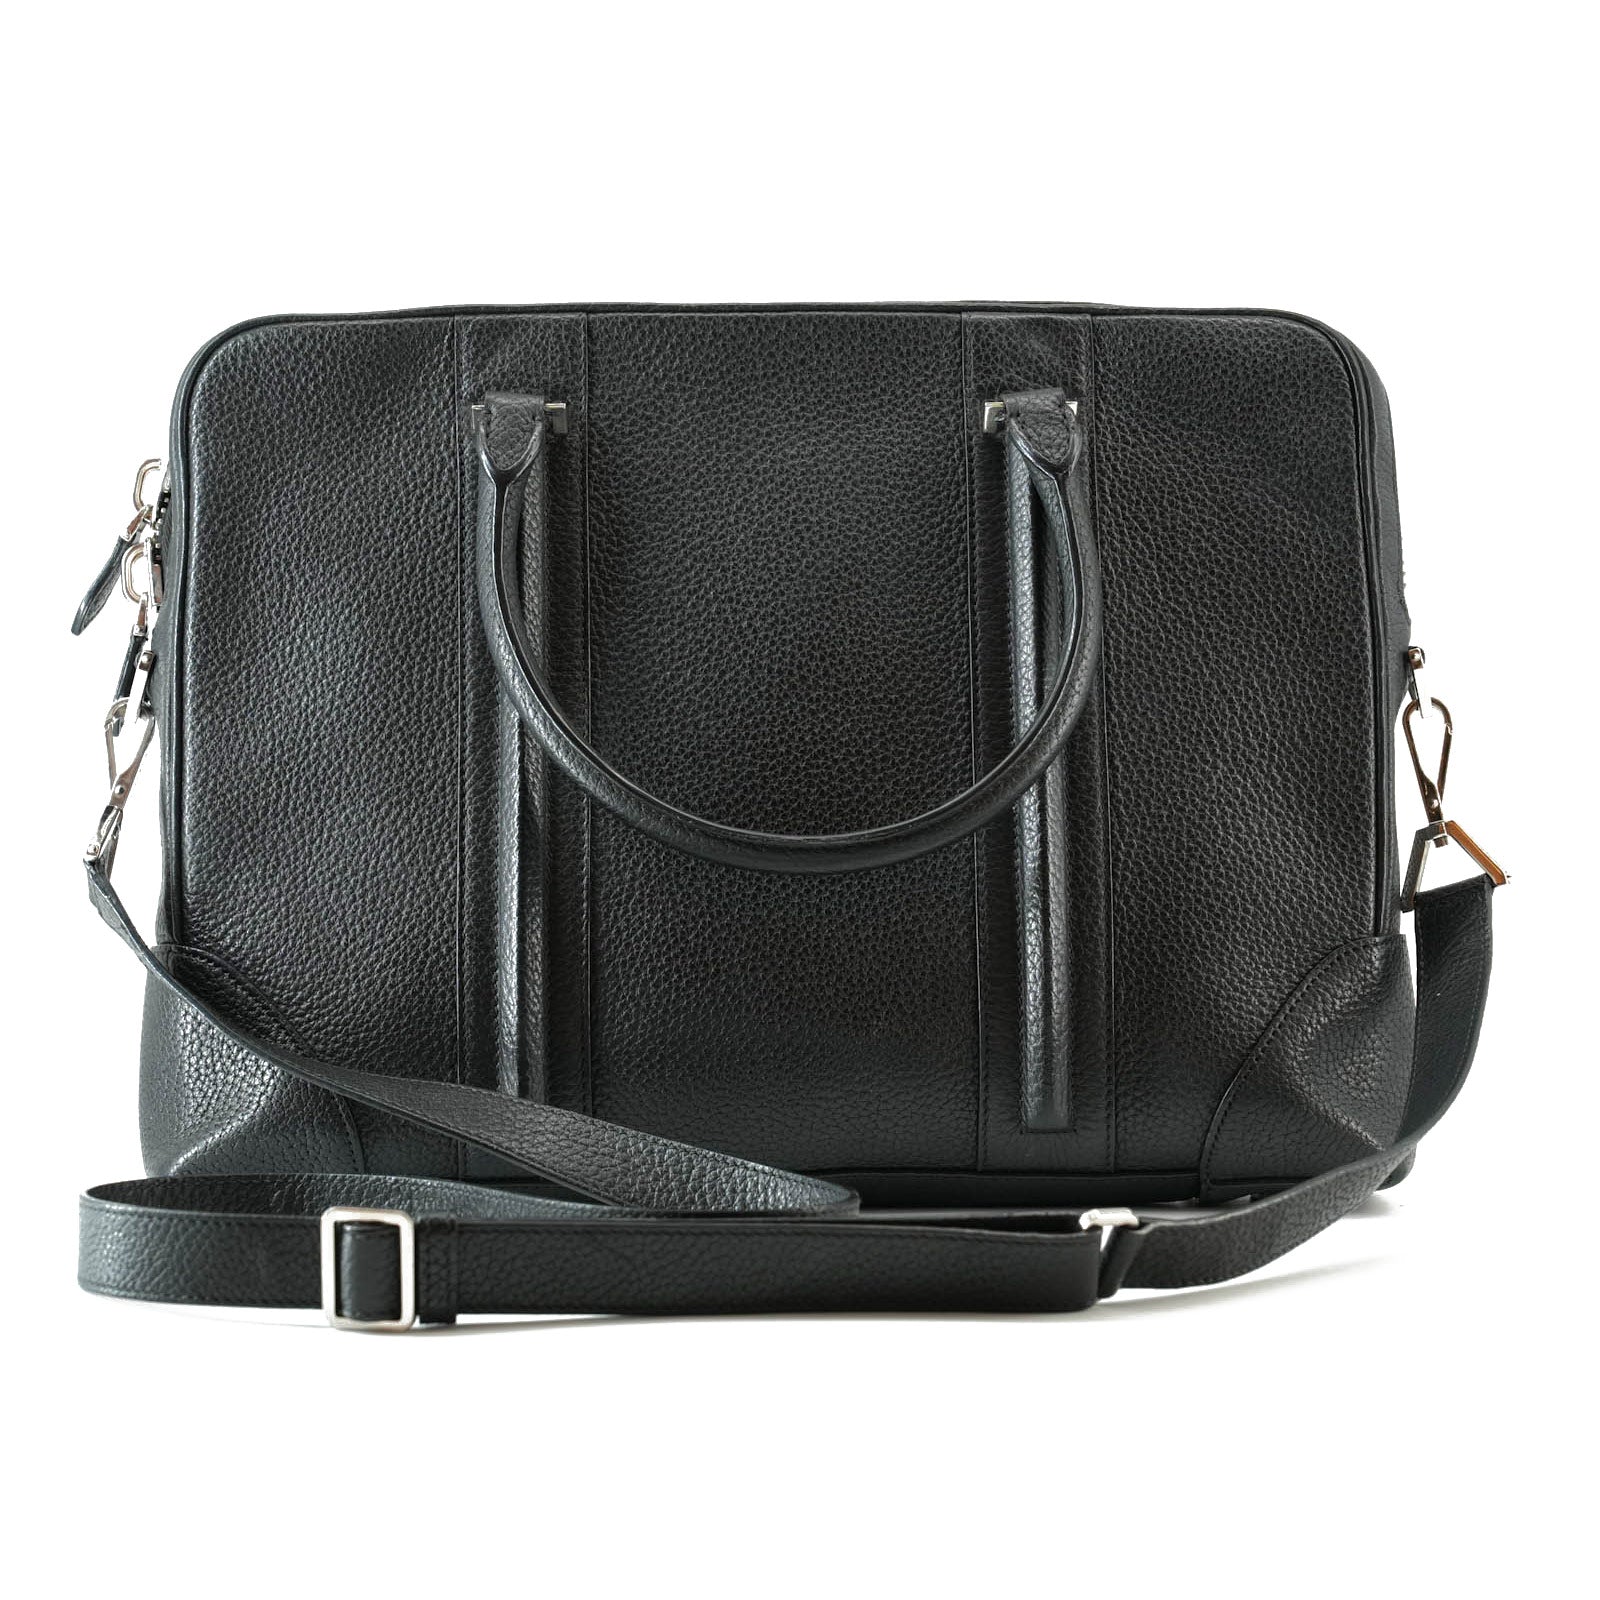 Givenchy Laptop Bag